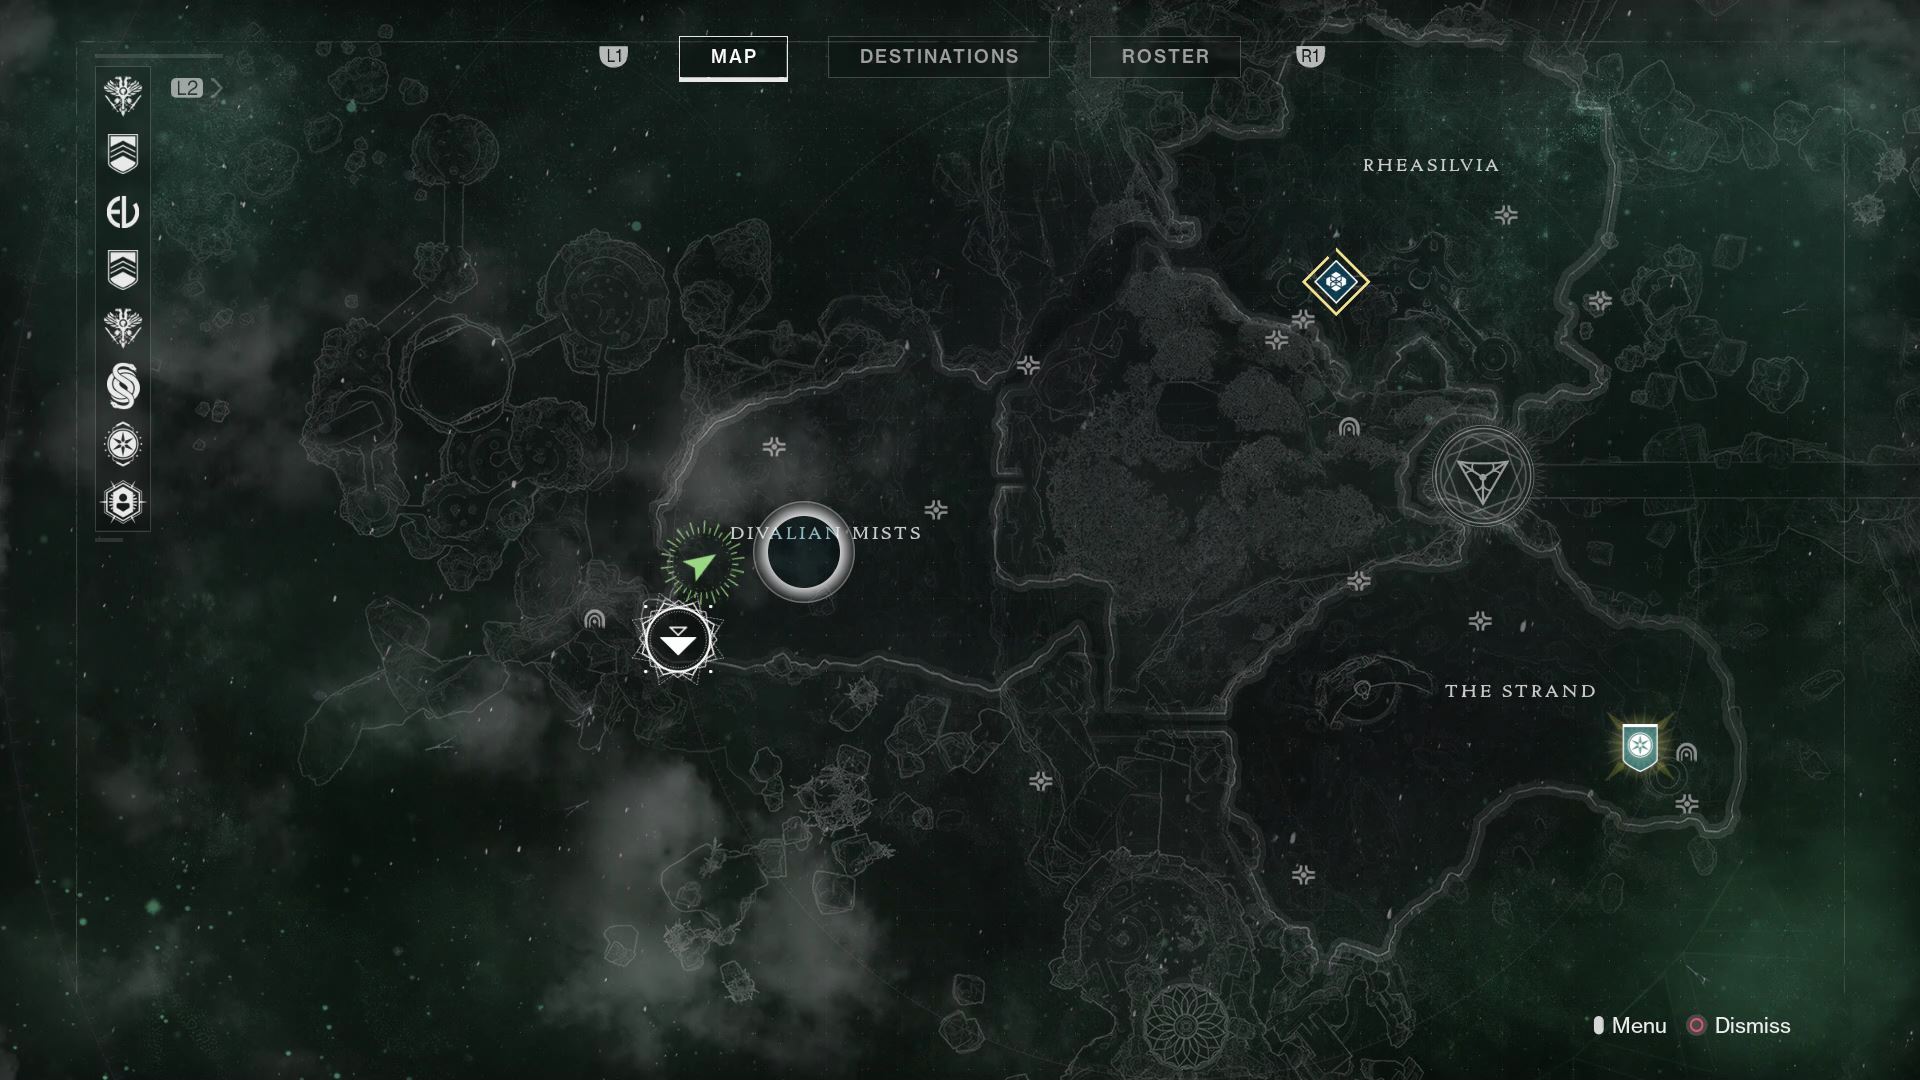 Destiny 2 From Zero: Region chests, Trask location & rewards